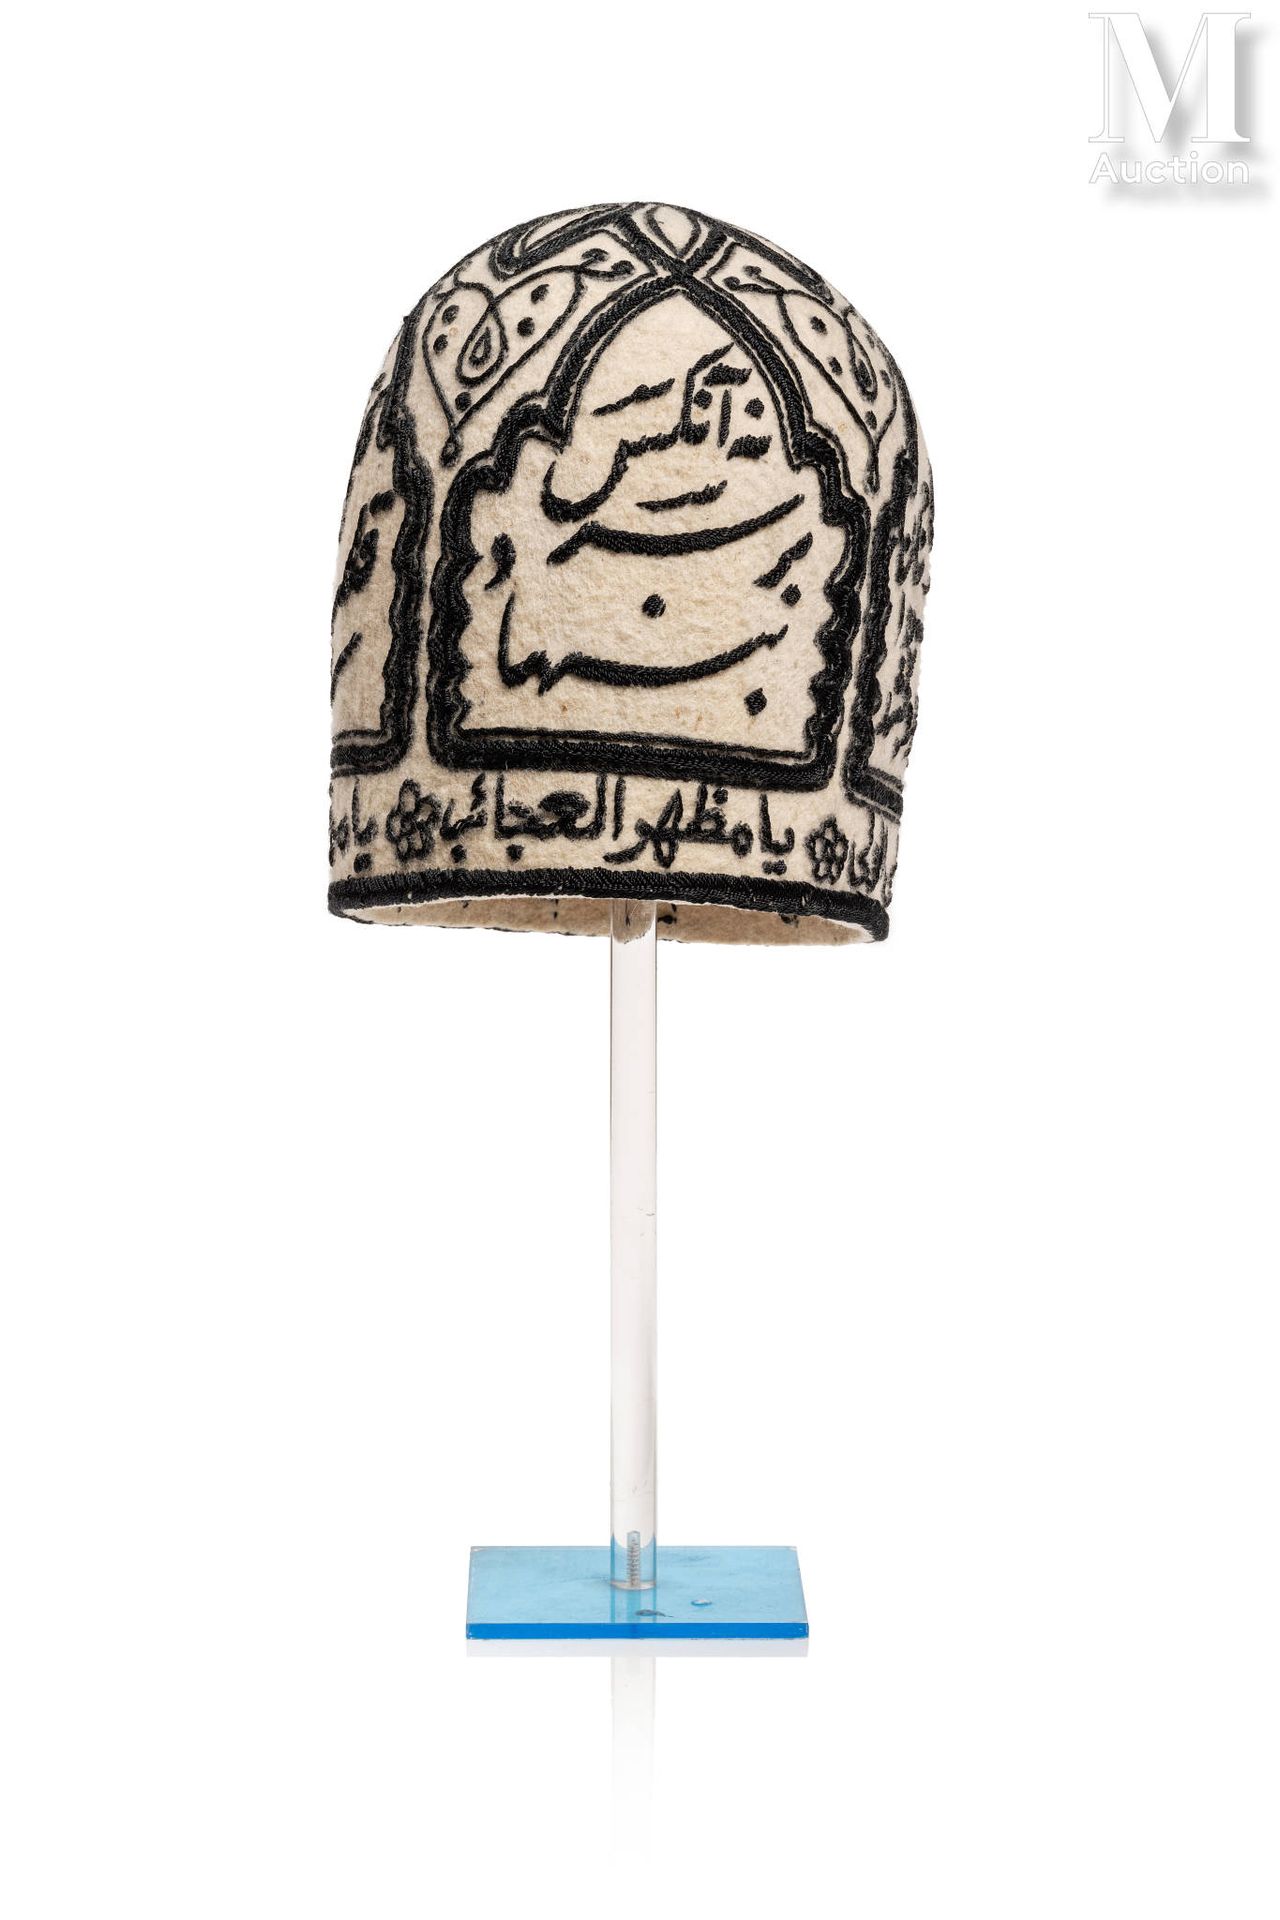 Bonnet de Derviche Iran

Woolen cloth embroidered with black felt, decorated wit&hellip;